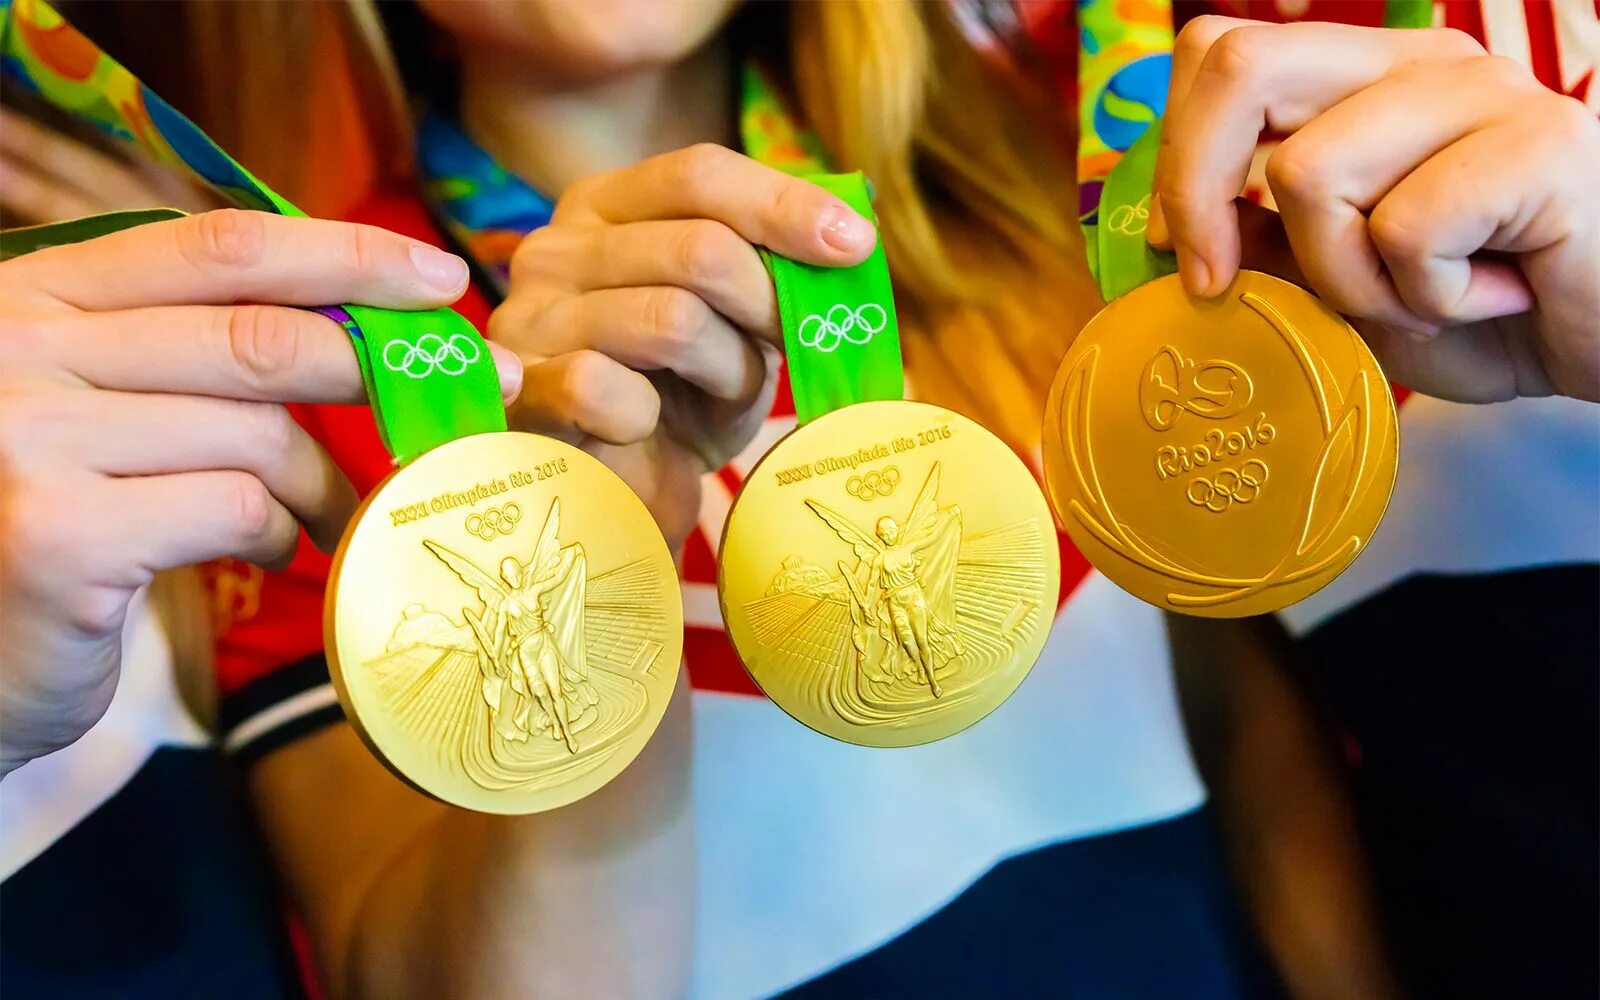 Olympic gold medal. Олимпийская медаль Рио де Жанейро. Олимпийские медали Рио де Жанейро 2016. Золотая медаль Рио 2016. Олимпийское золото.